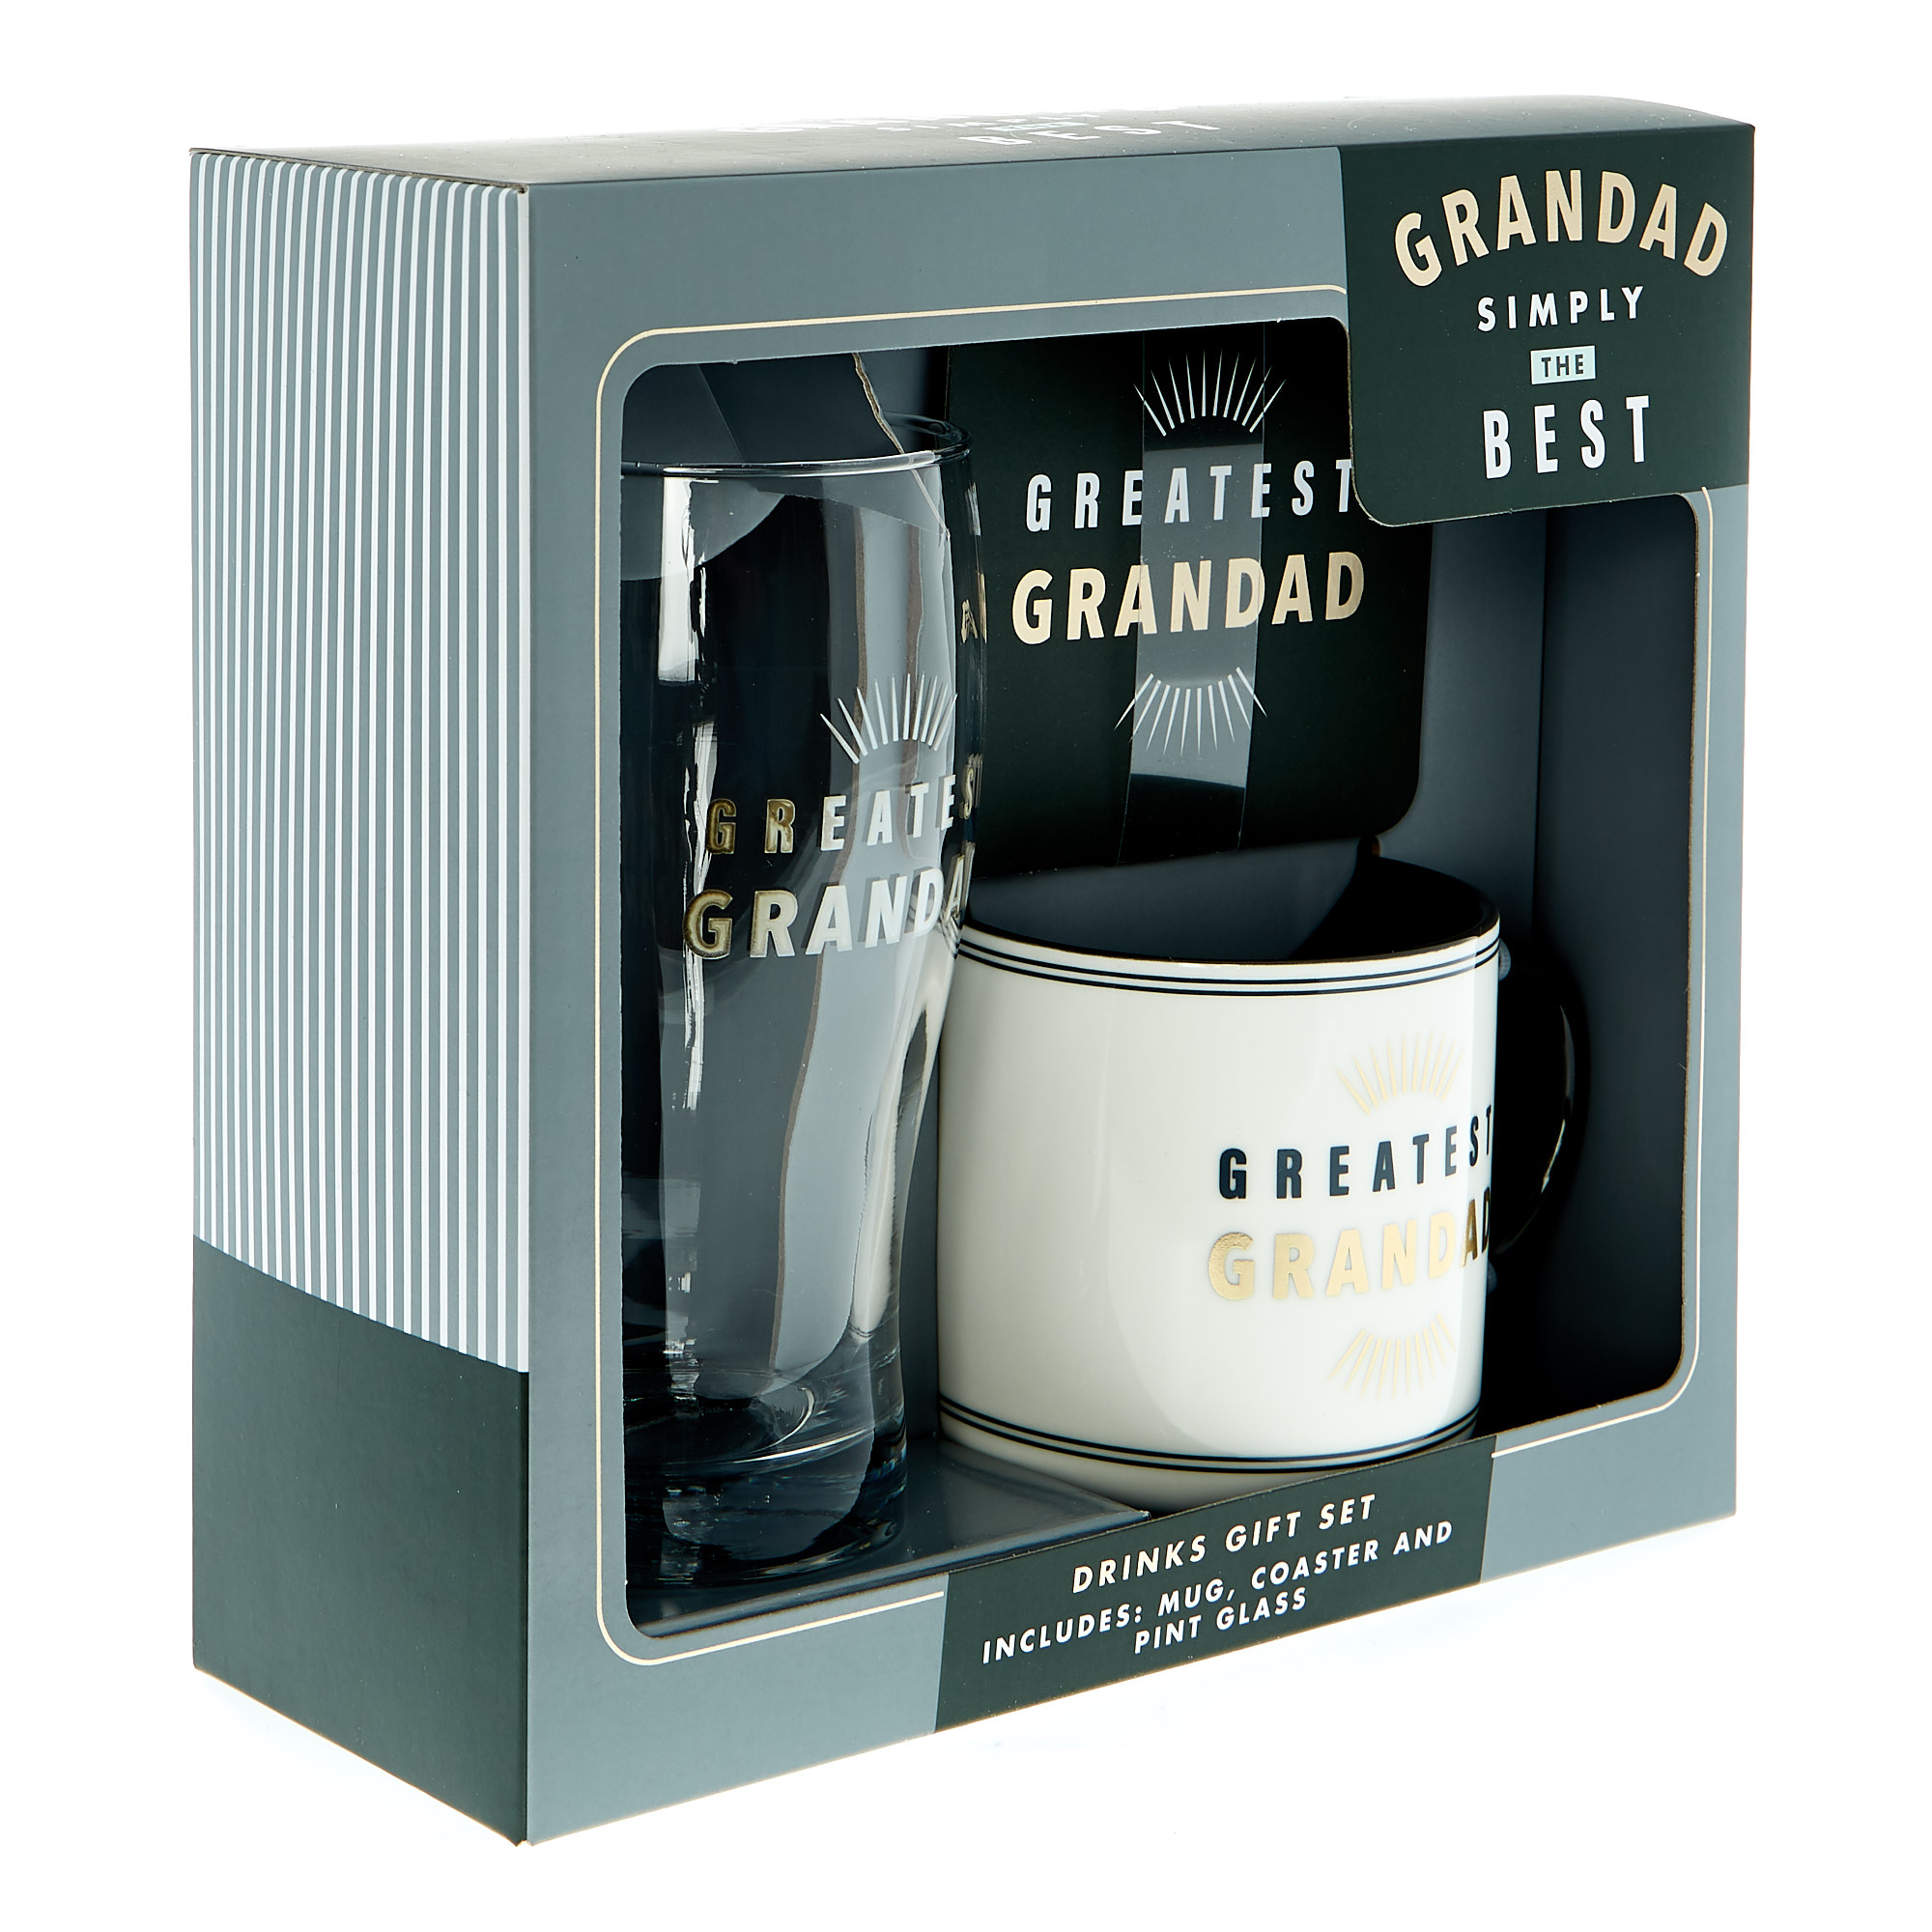 Grandad Simply The Best Drinks Gift Set